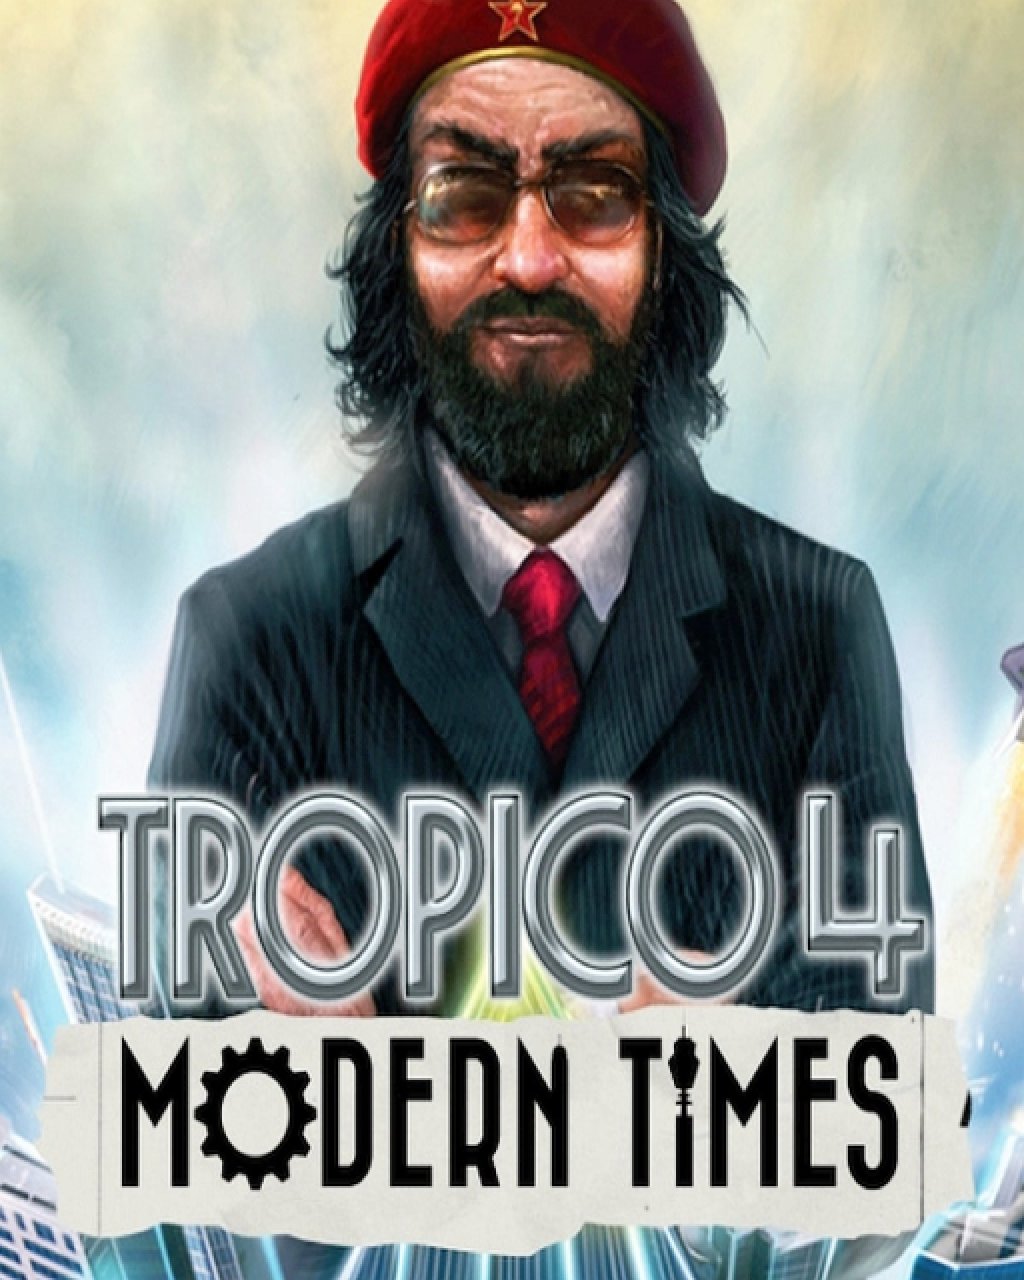 ESD Tropico 4 Modern Times